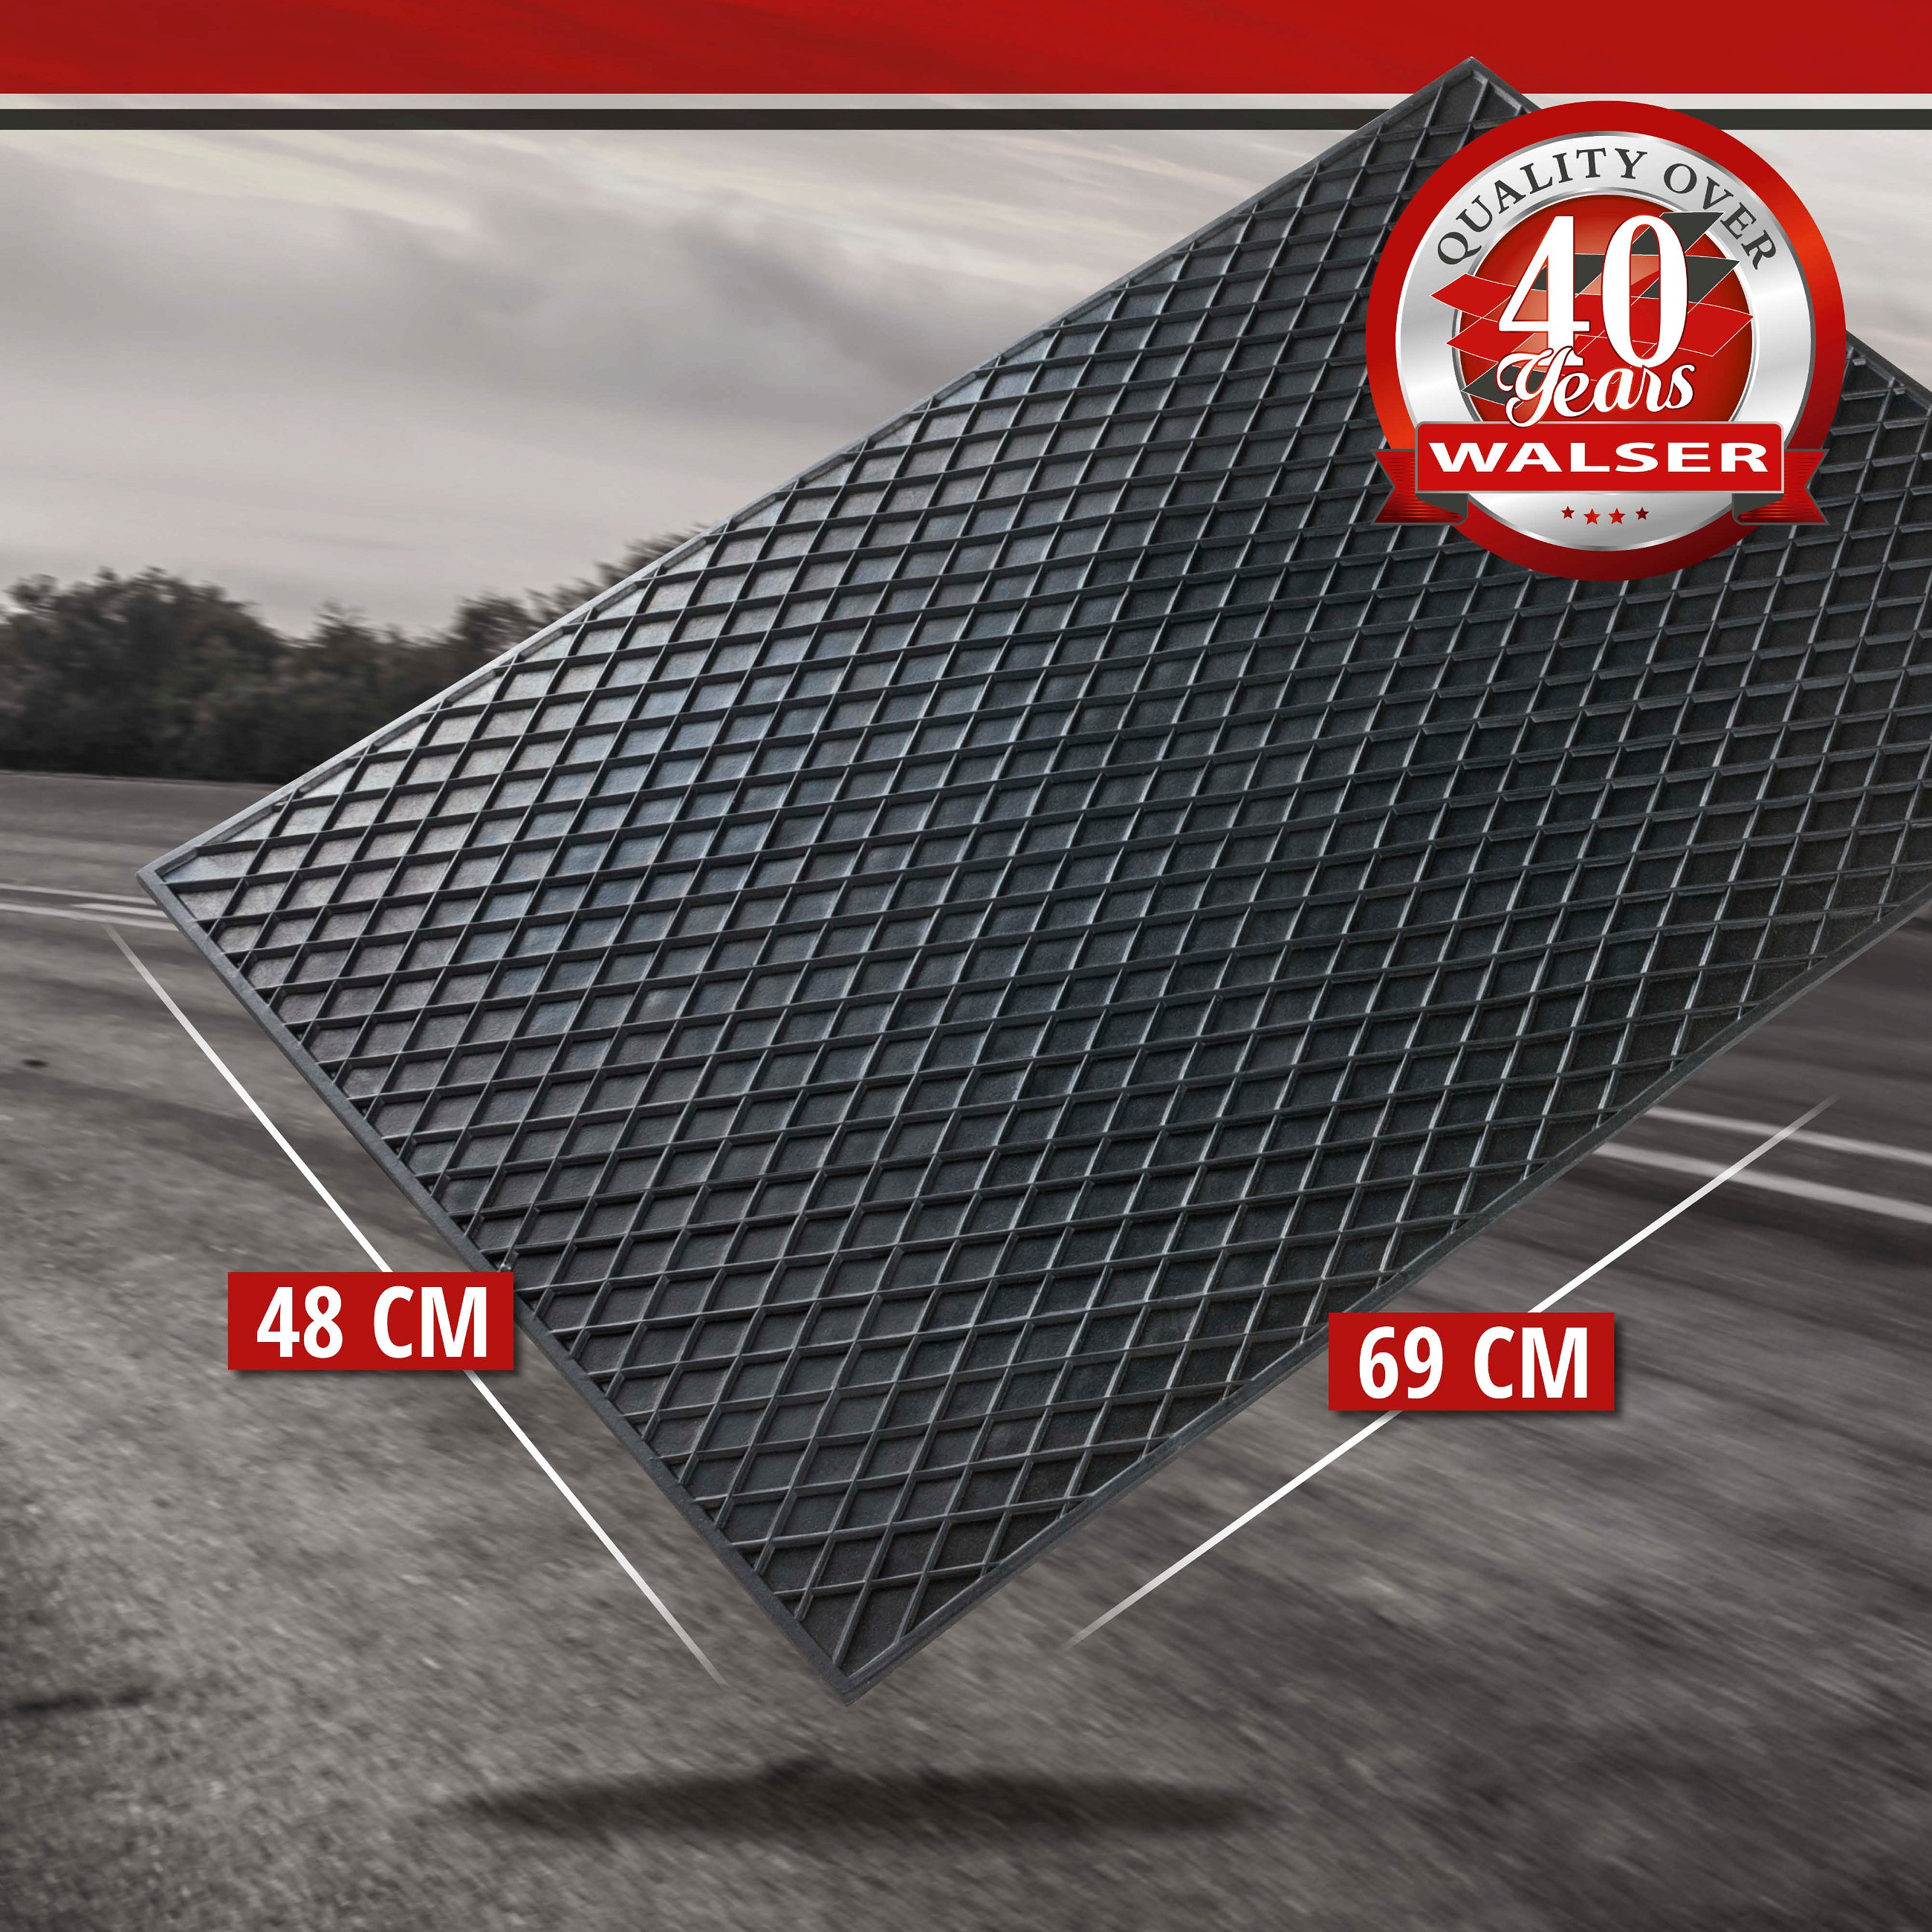 Rubber mats rectangle ca. 70x50 cm black